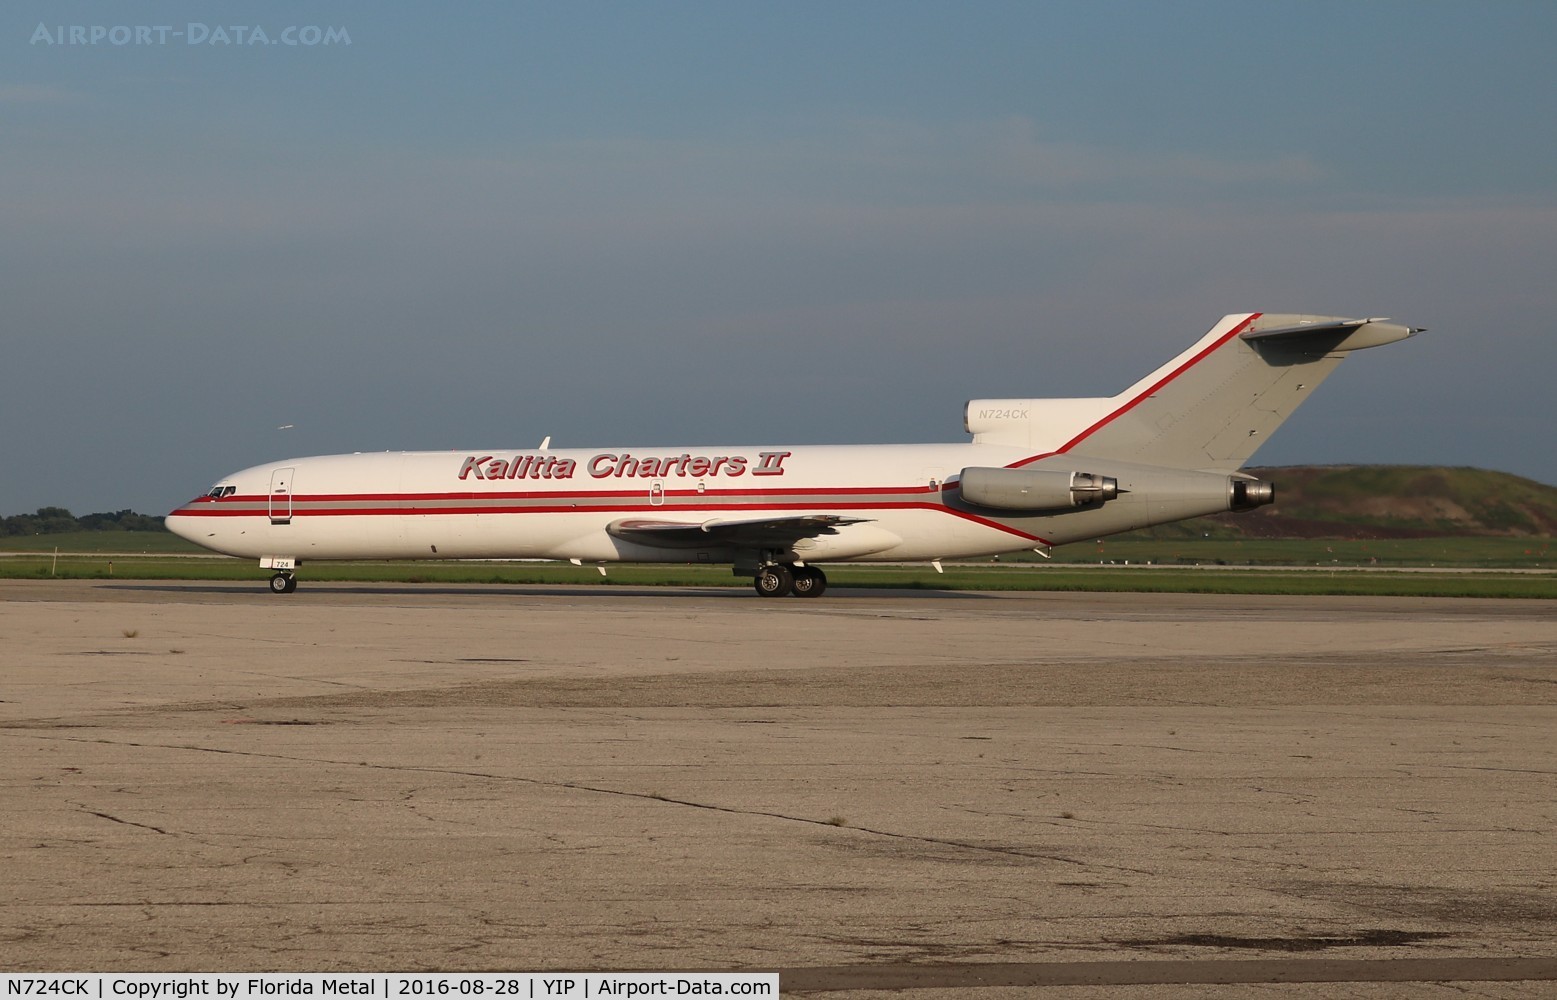 N724CK, 1971 Boeing 727-225F C/N 20383, Kalitta Charters